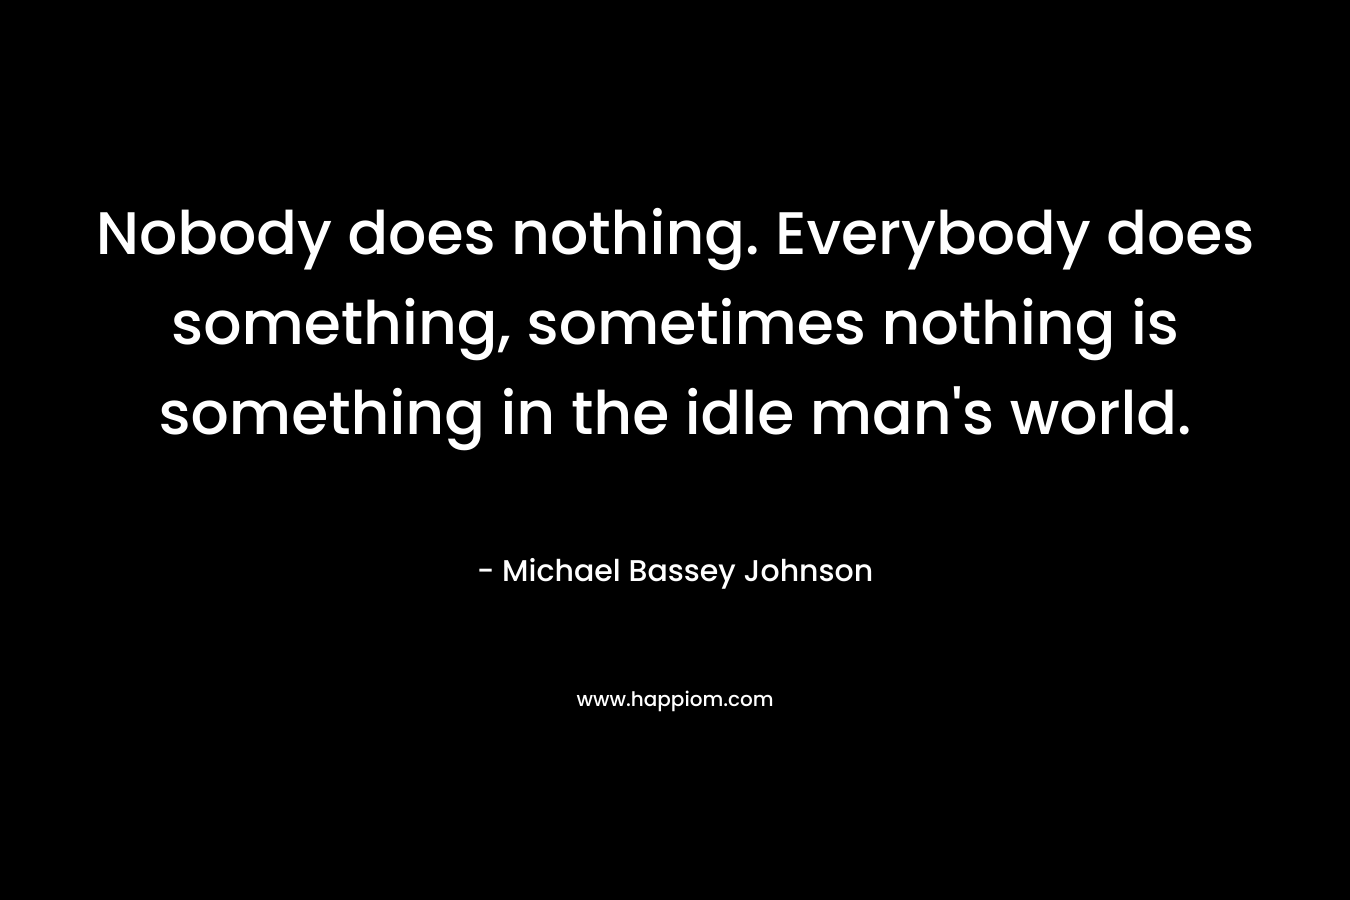 Nobody does nothing. Everybody does something, sometimes nothing is something in the idle man's world.